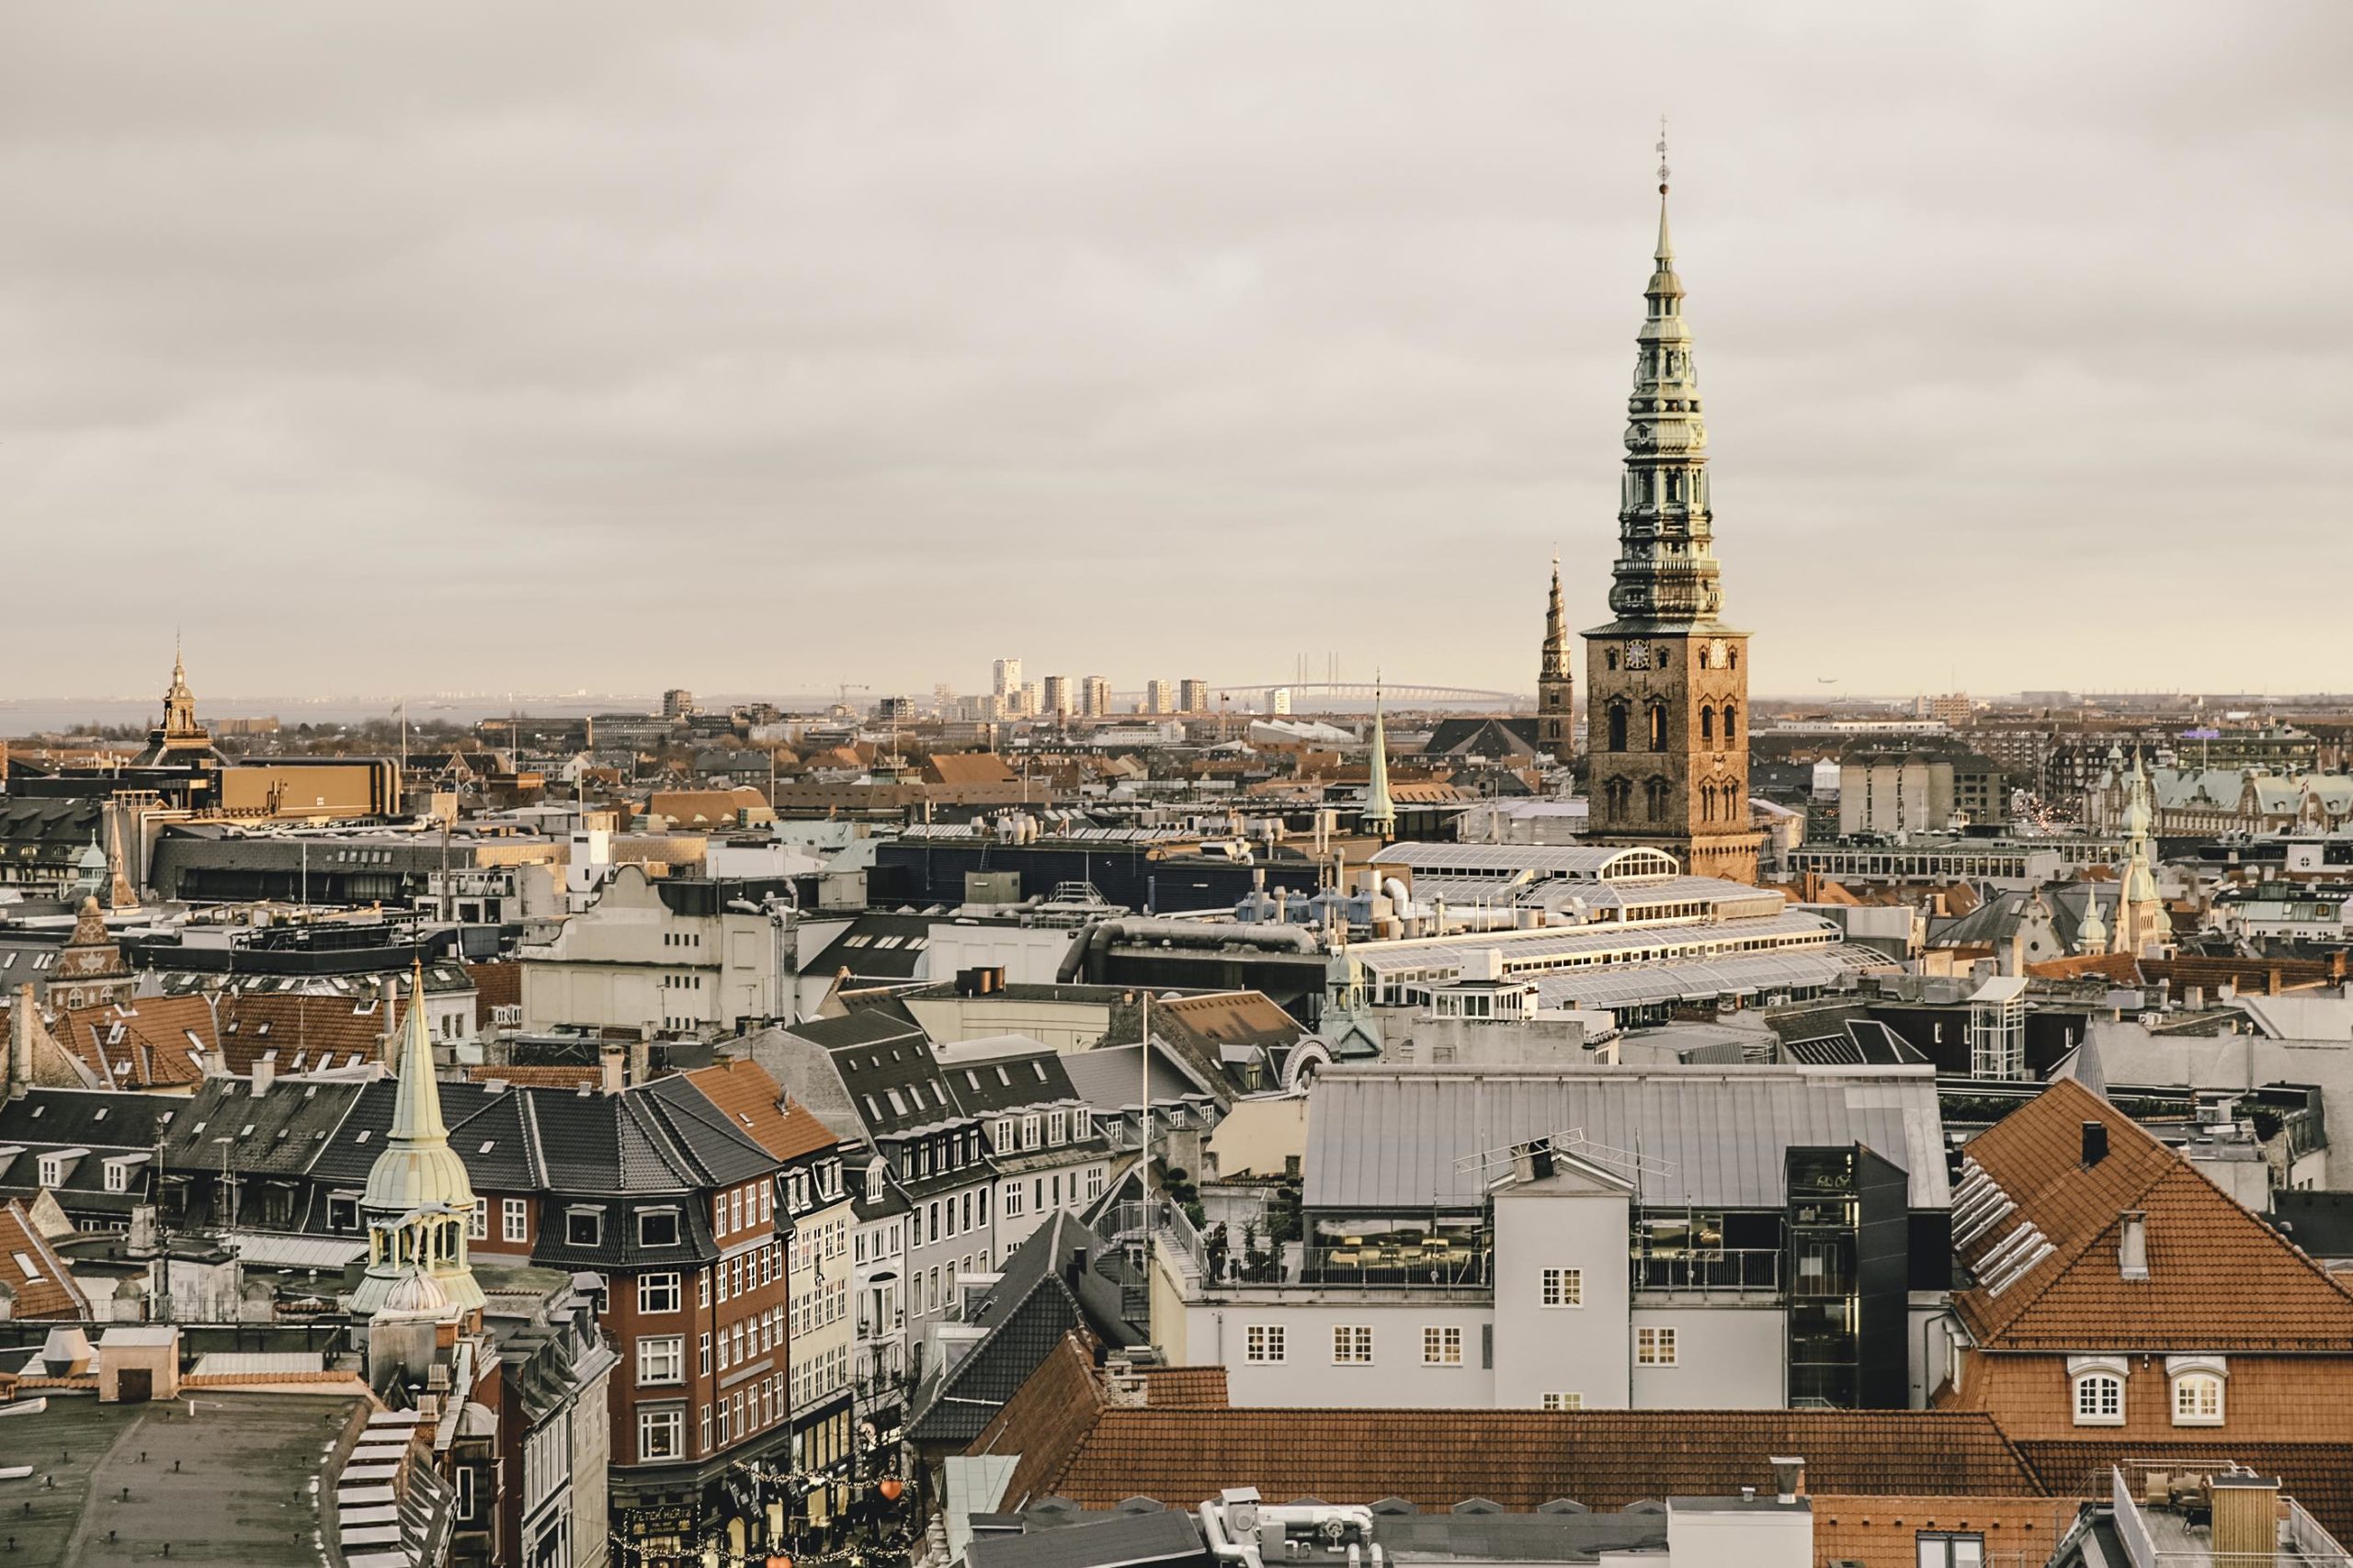 Insider Tips on Copenhagen by Photographer Alona Andersen